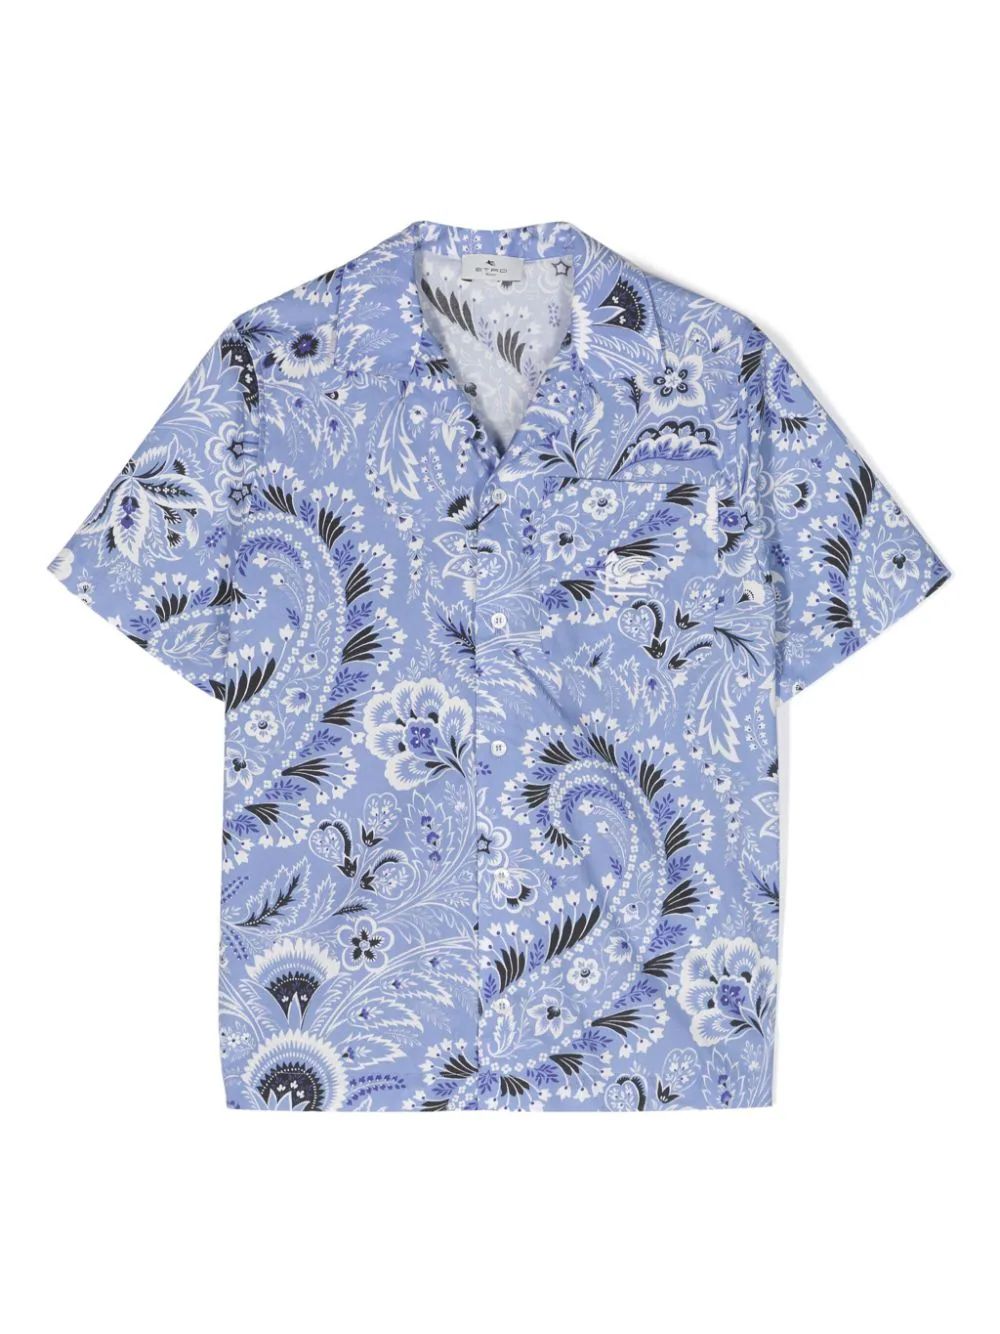 The DetailsETRO KIDSPaisley-print cotton shirtMade in ItalyHighlightsblue cotton paisley print ca... | Farfetch Global